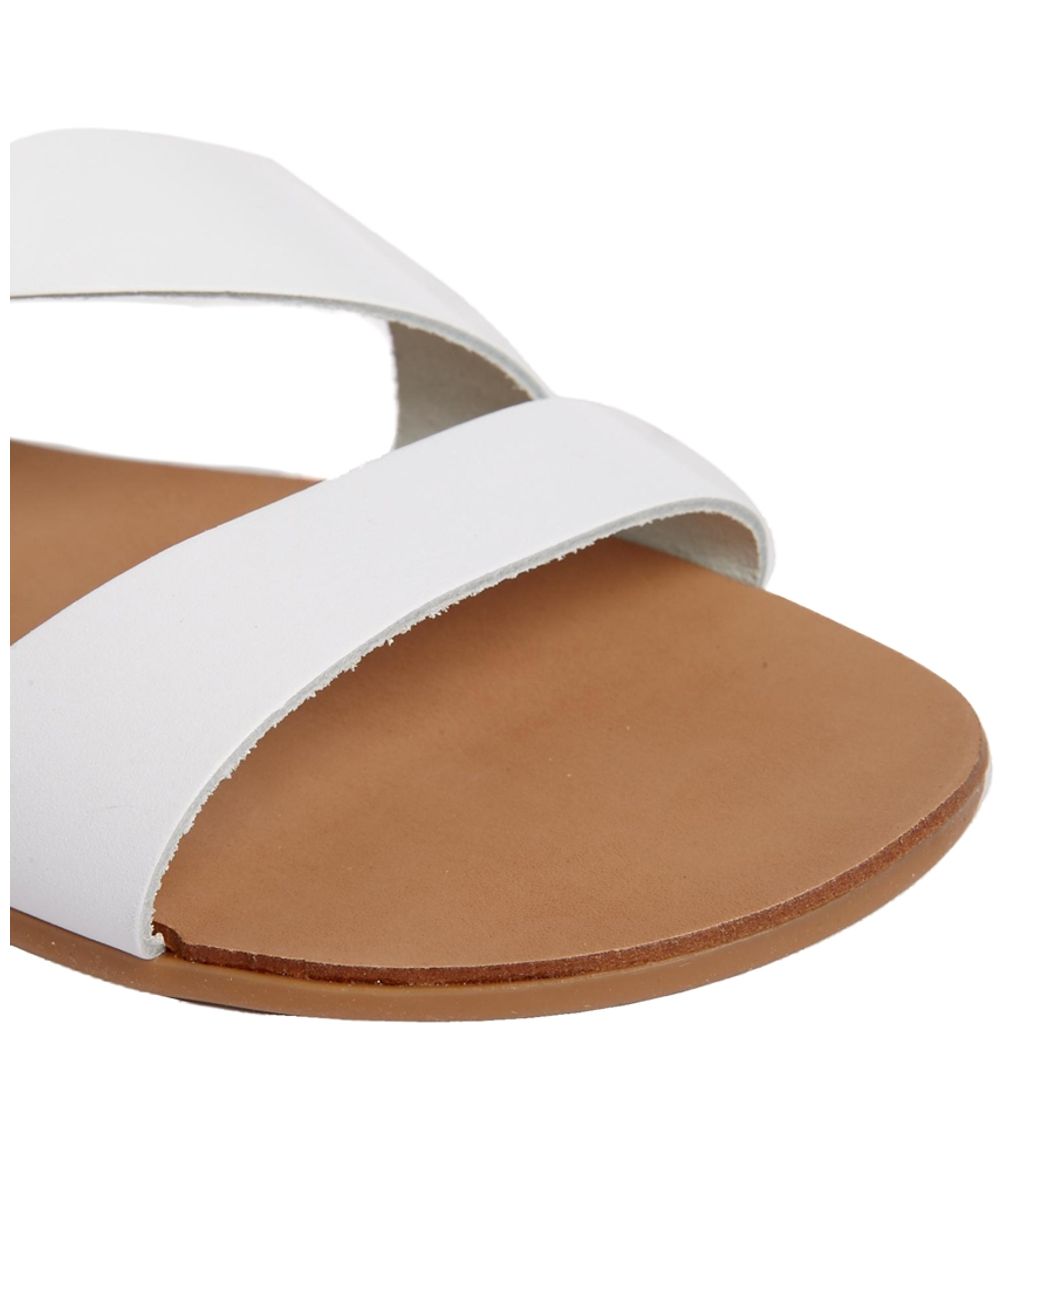 ALDO Leather Asymmetric Flat Sandals